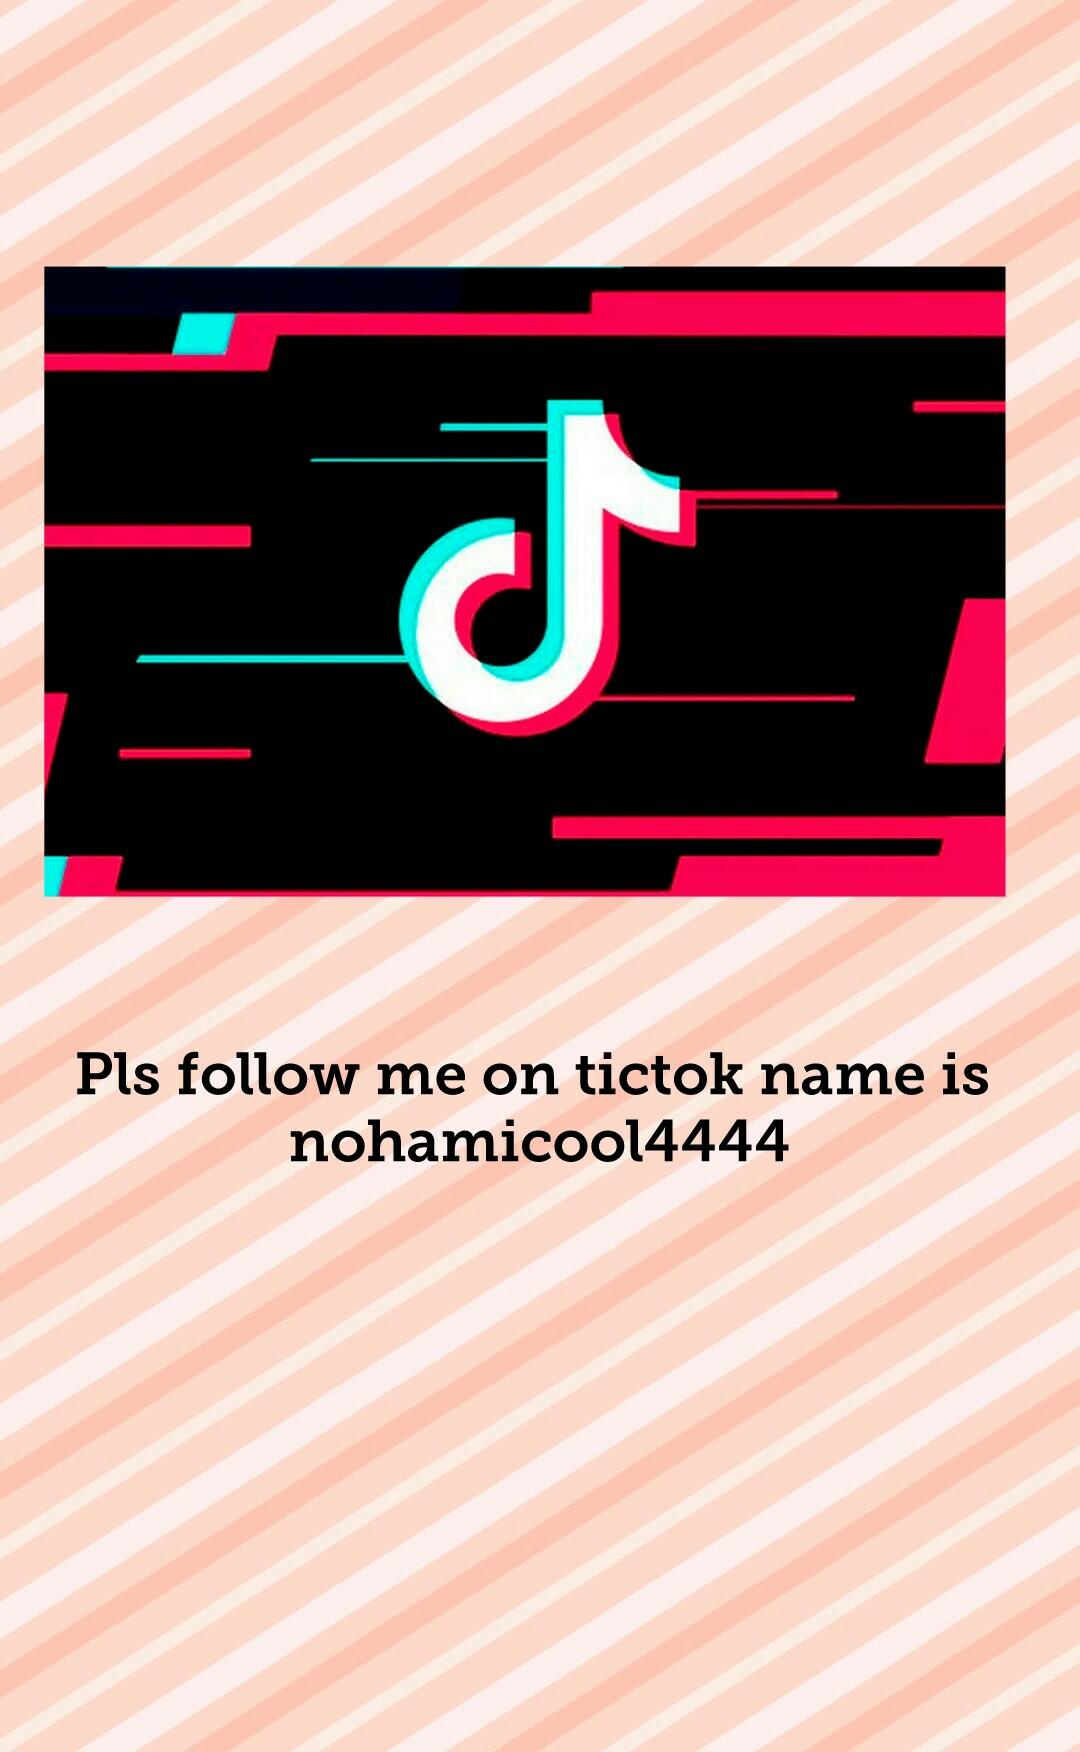 Pls follow me on tictok name is nohamicool4444